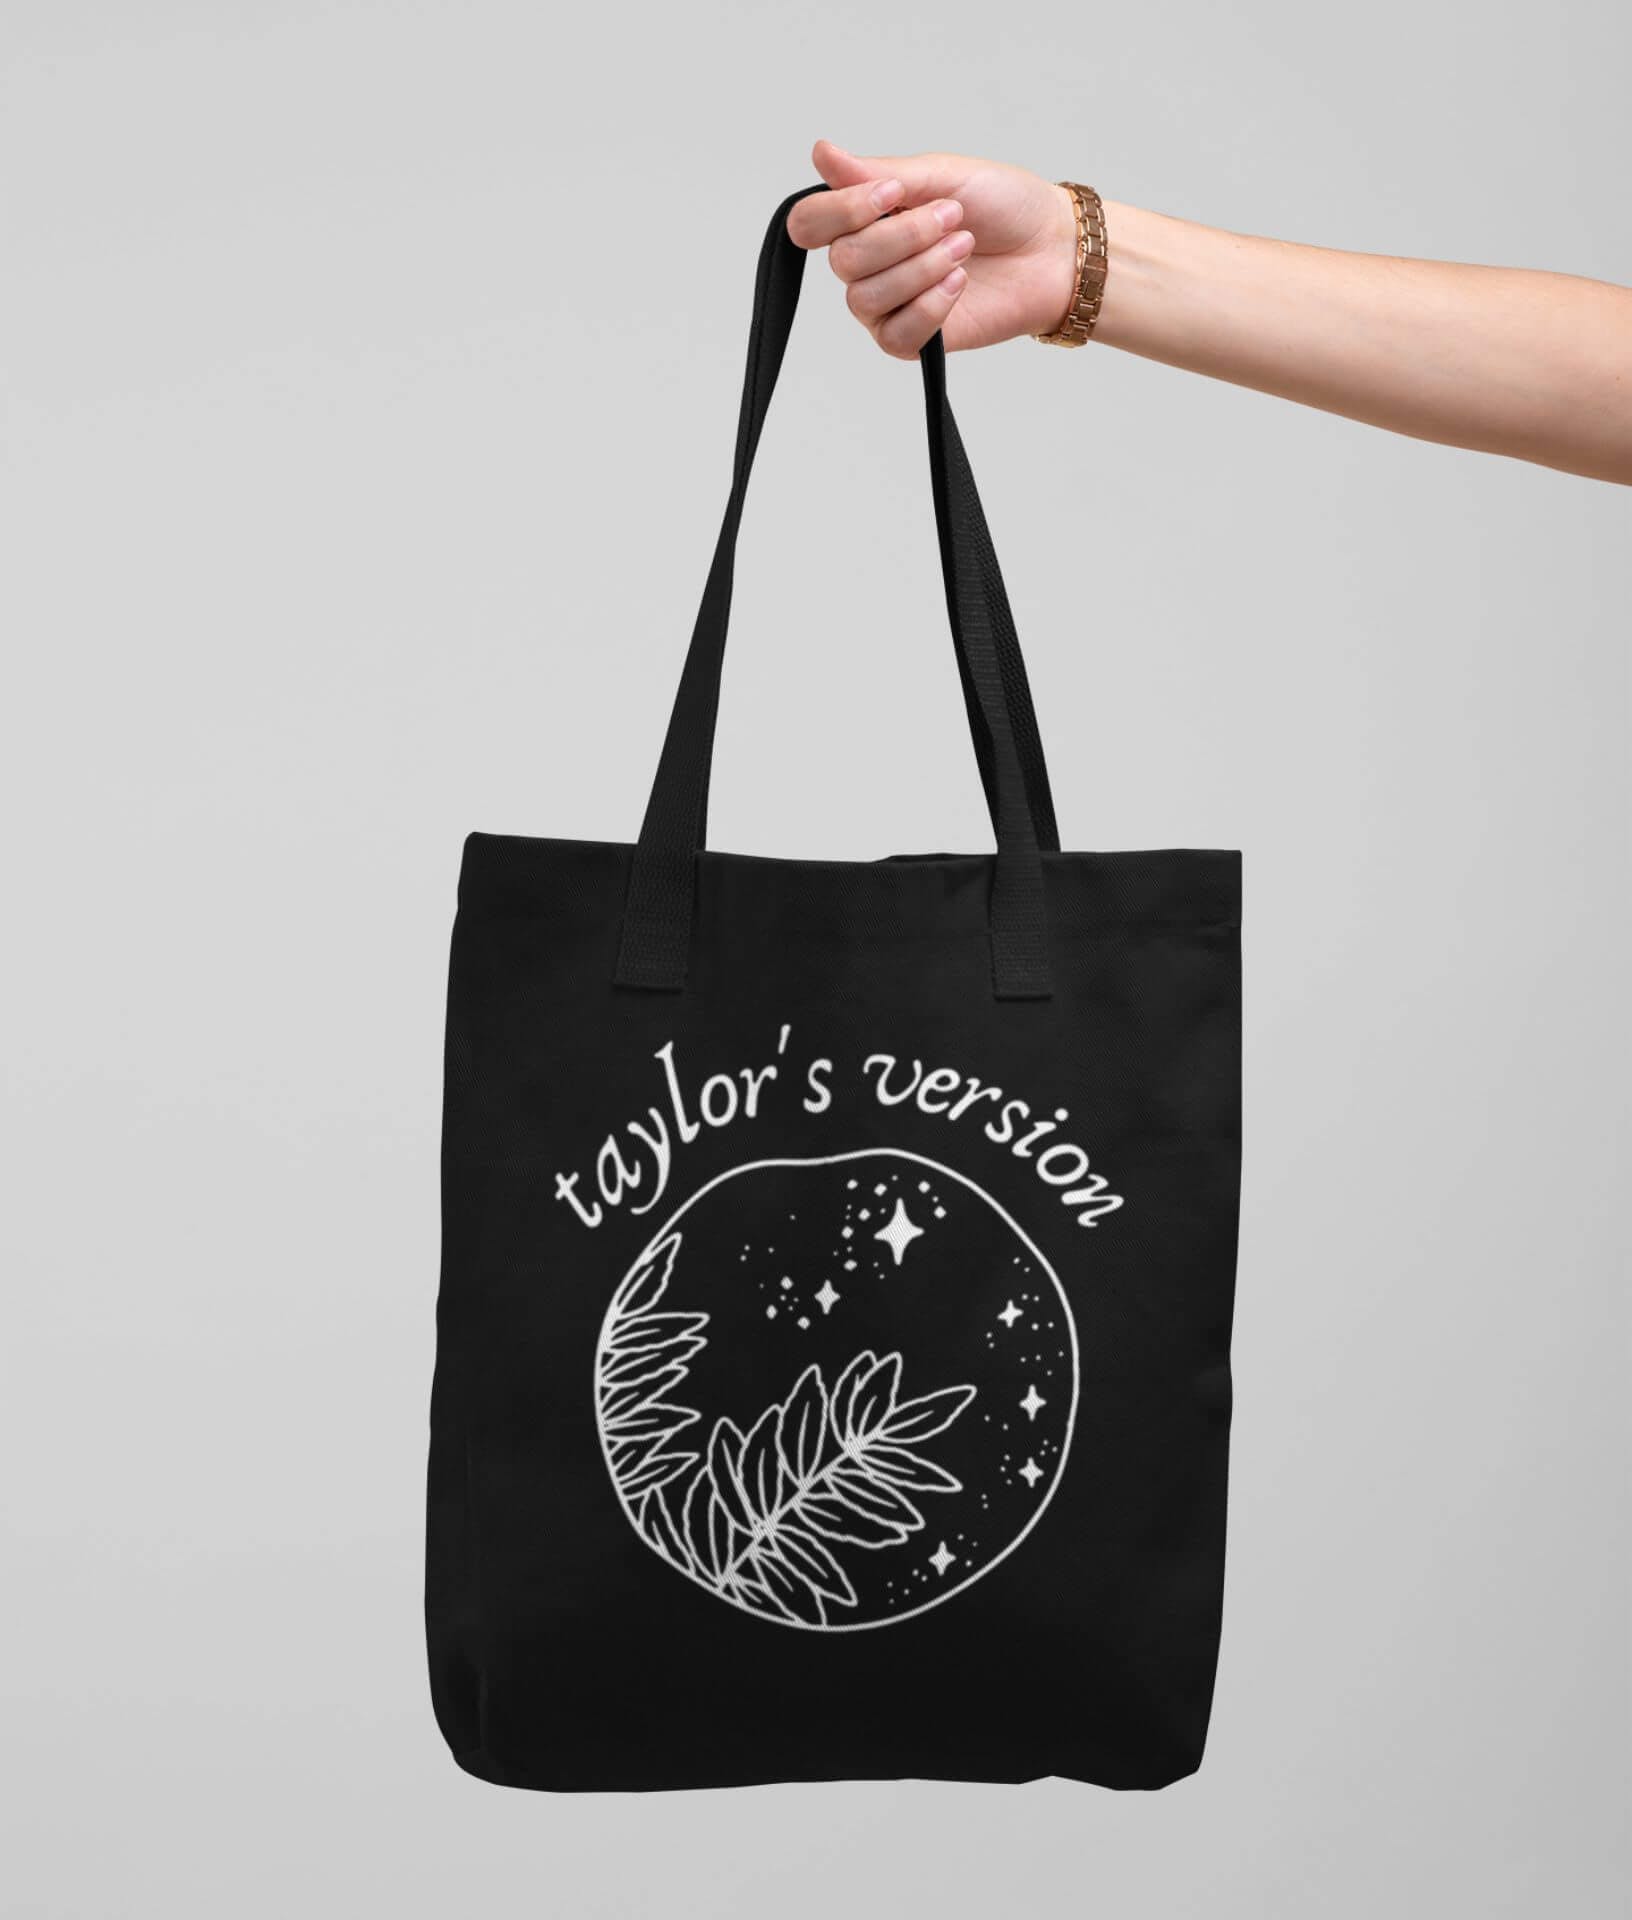 Taylor’s Version Tote bag